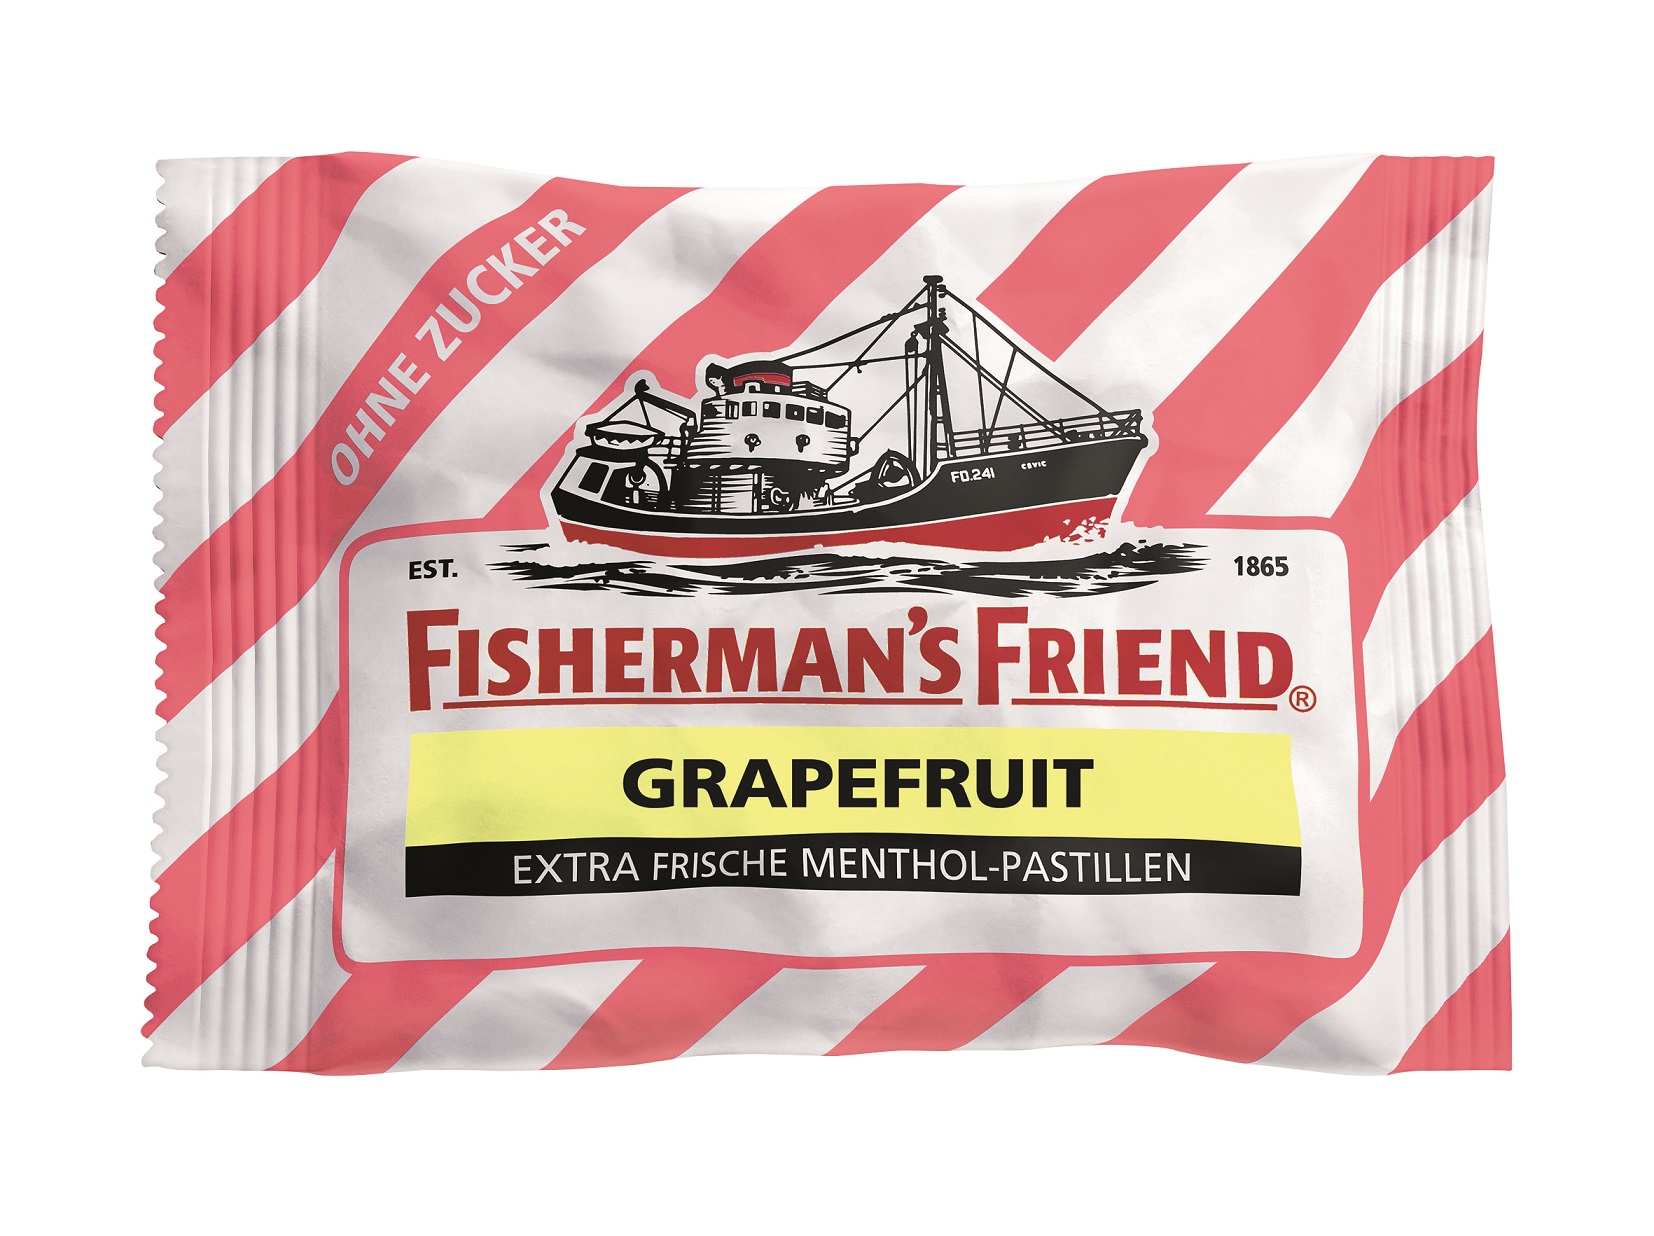 Fisherman’s Friend Grapefruit